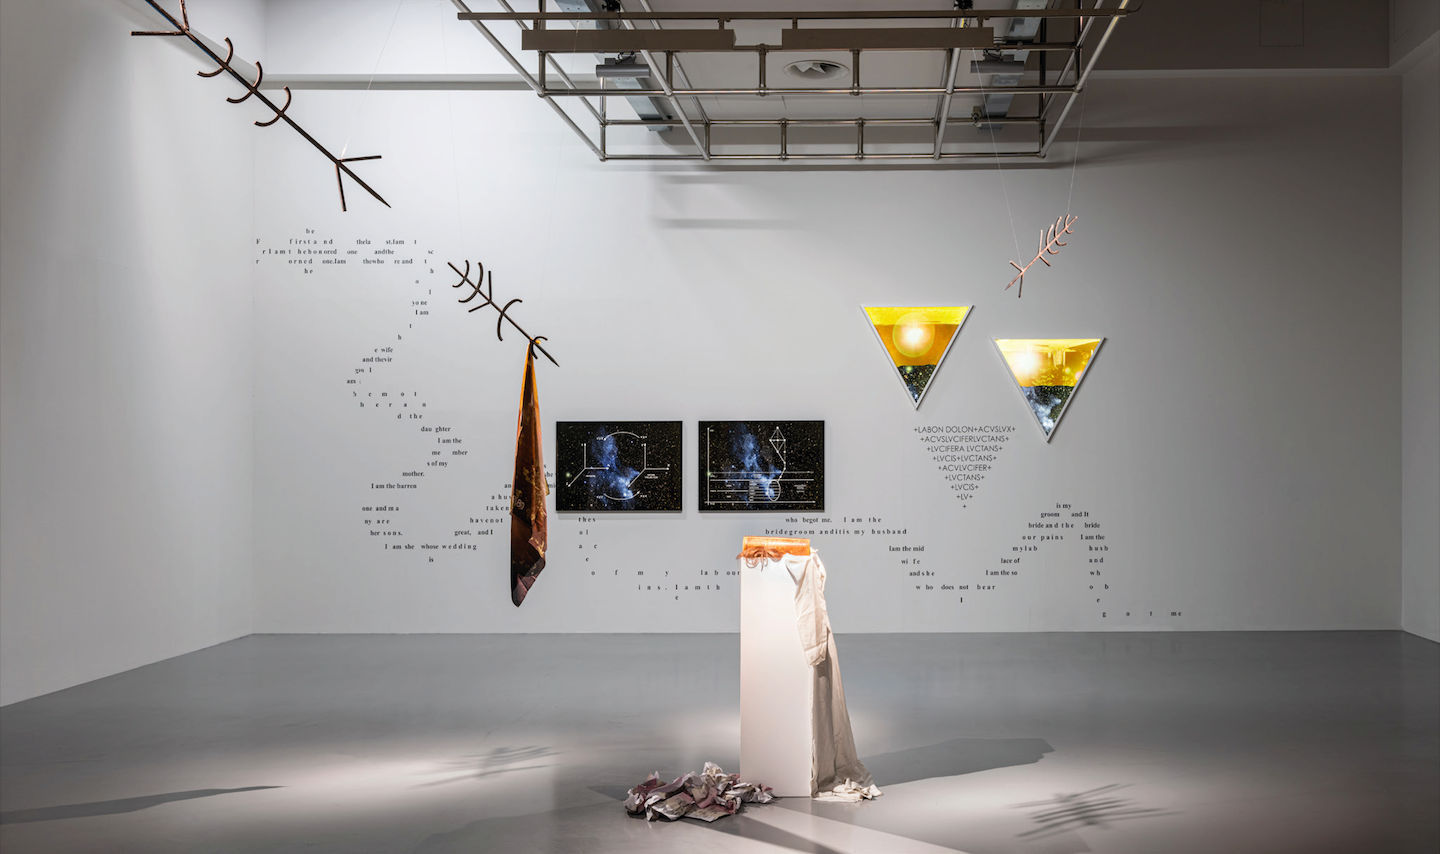 Chiara Fumai, 'Astral Body' (2016). Exhibition view: 'Chiara Fumai. Poems I Will Never Release 2007–2017', Centro per l’arte contemporanea Luigi Pecci, 2021. Photo © Ela Bialkowska.